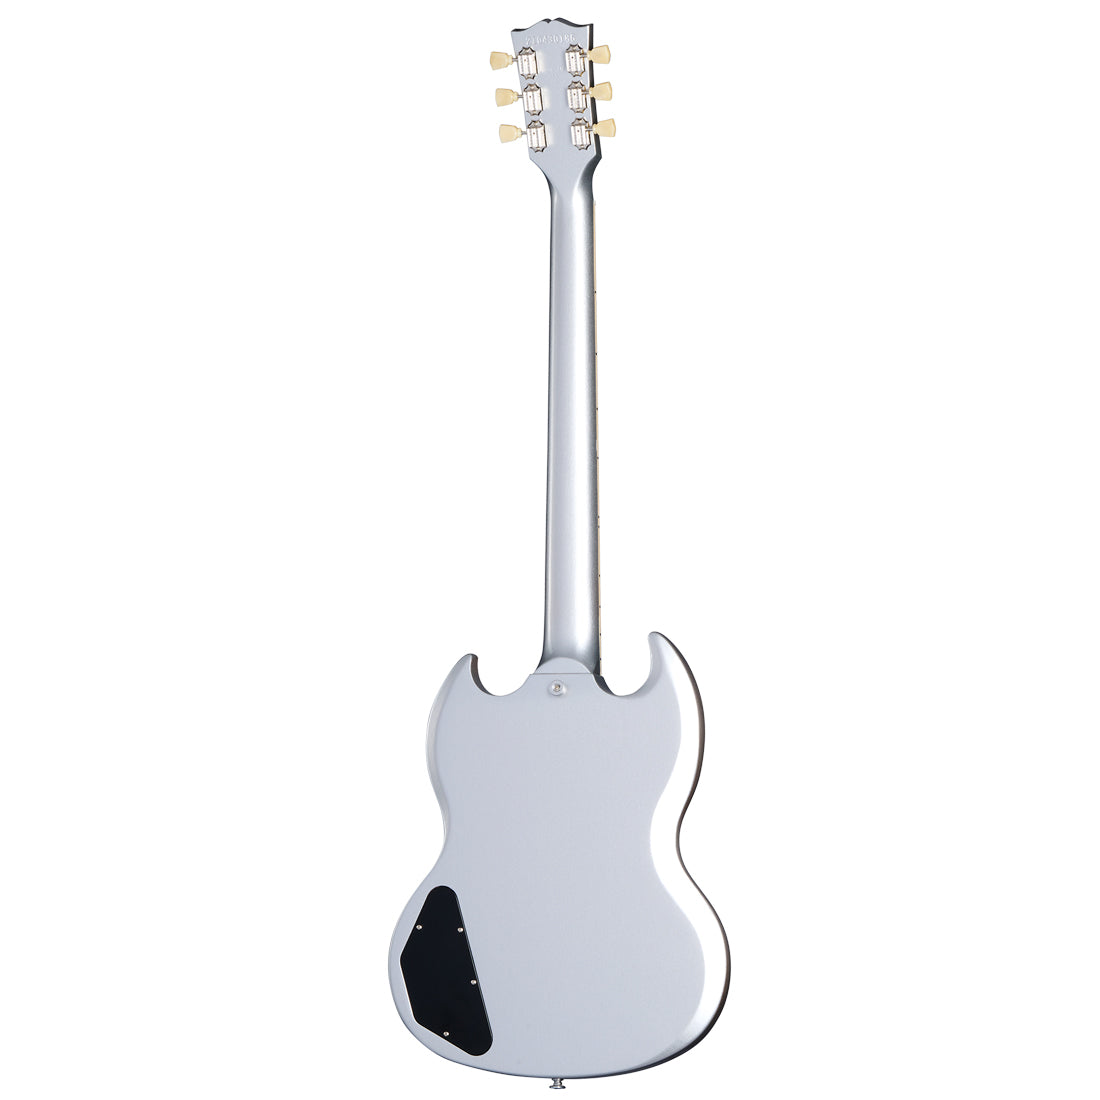 Gibson SG Standard '61 Silver Mist